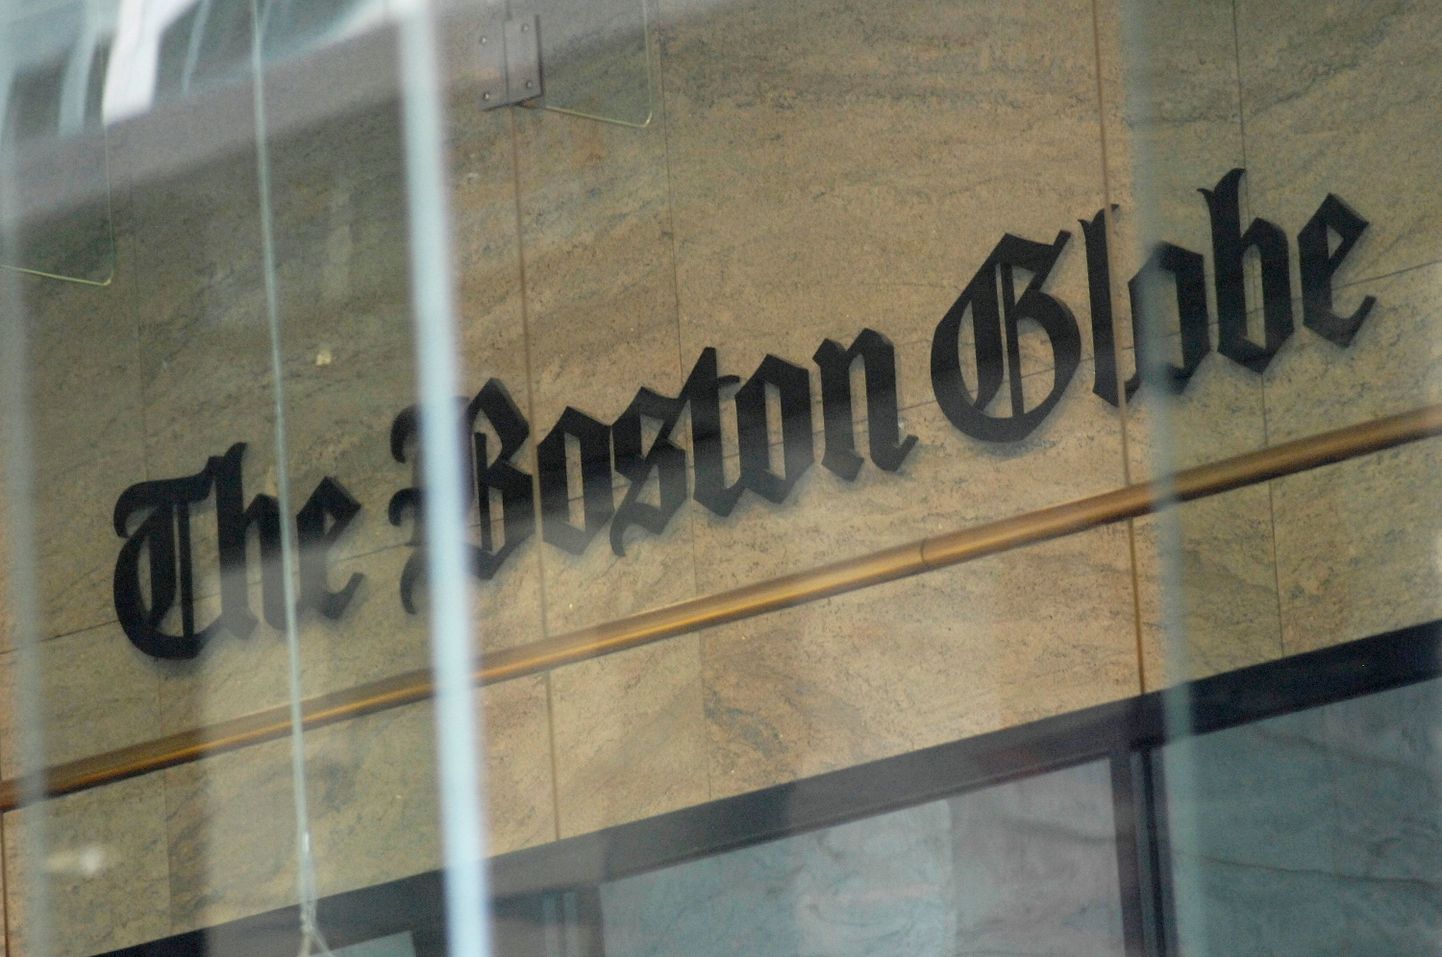 Boston Globe logo.